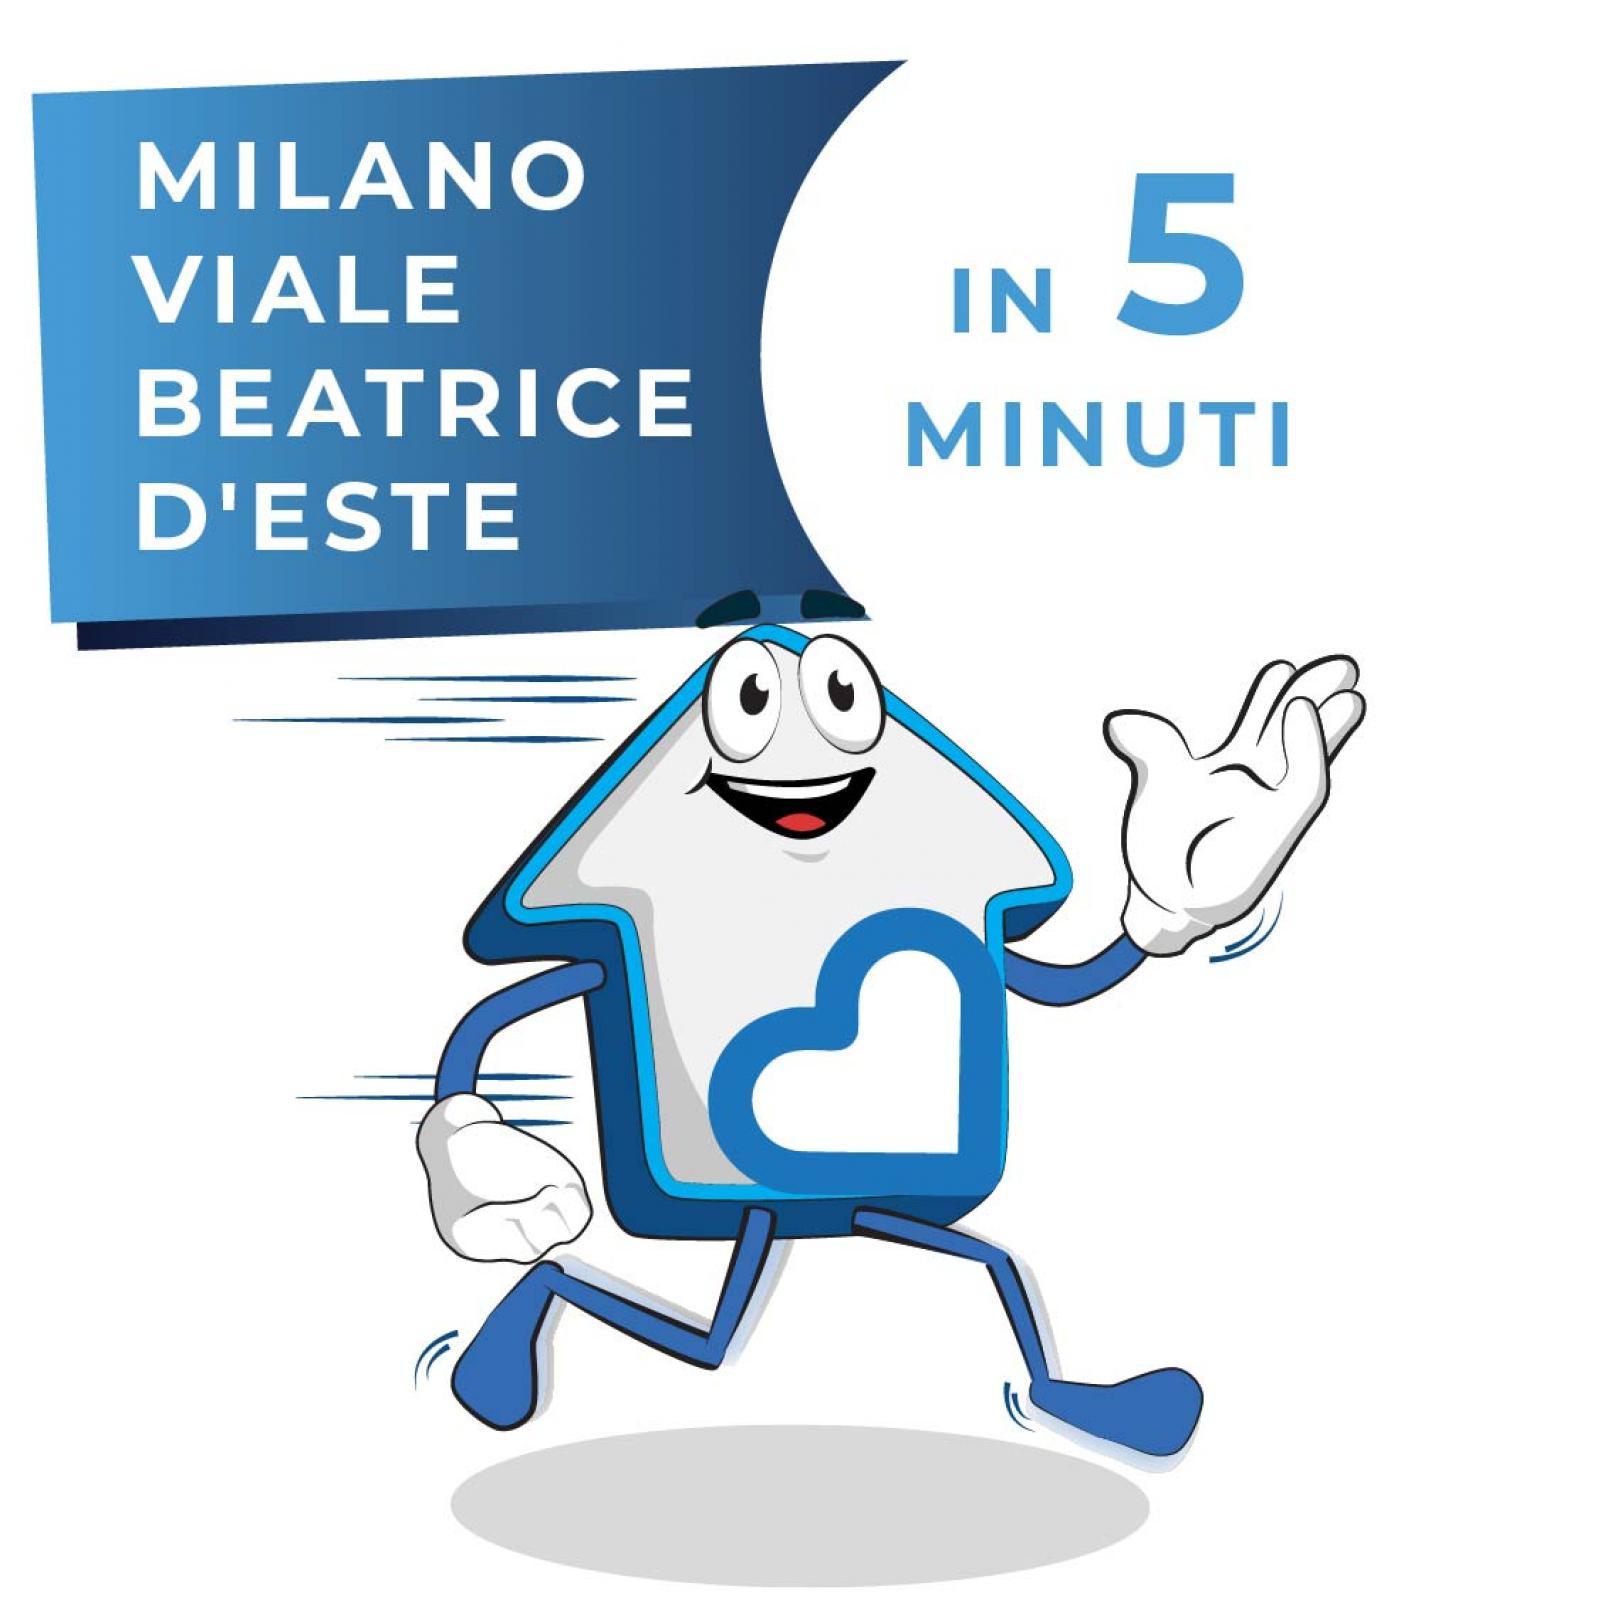 Milano Viale beatrice d'este